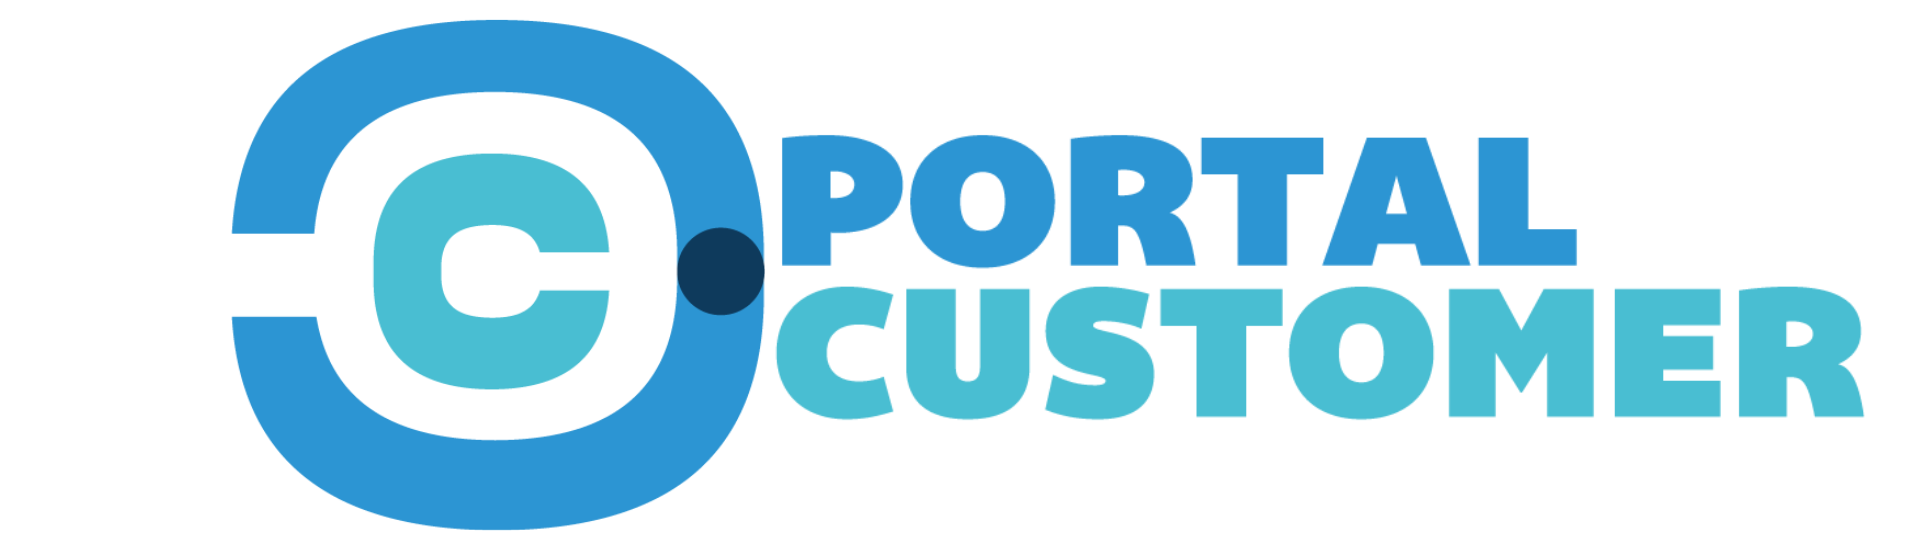 Portal Customer 